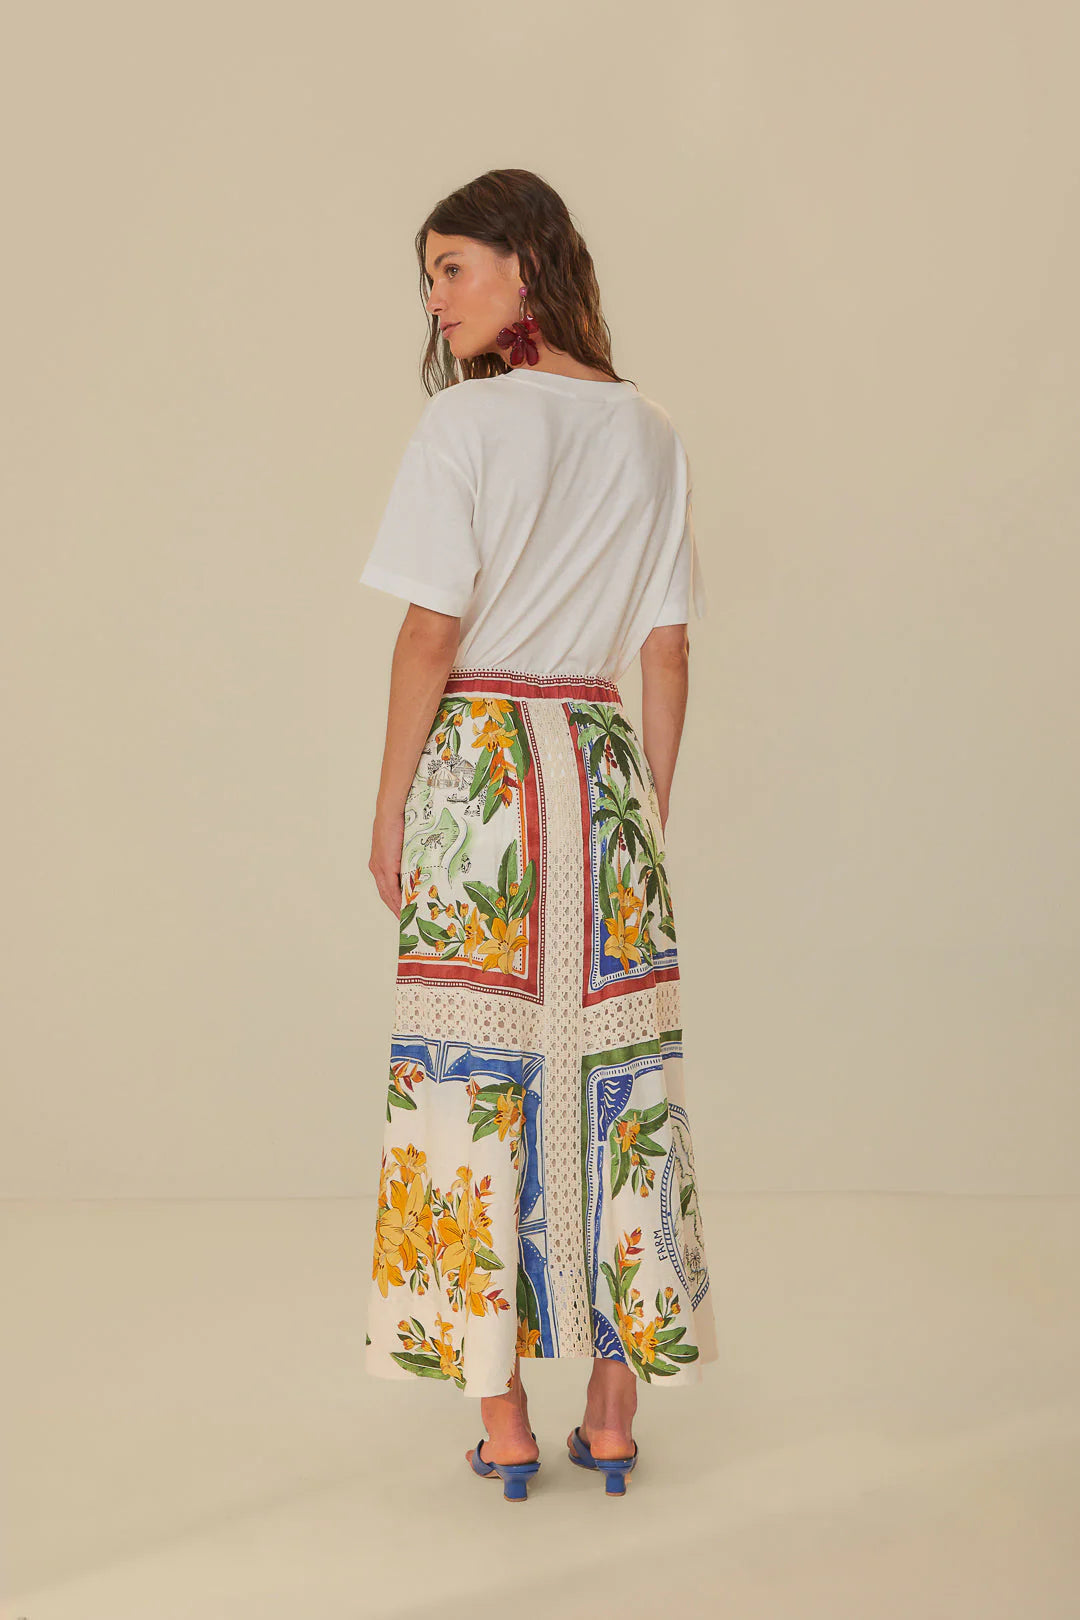 Off-White Tropical Destination Lenzing™ Ecovero™ Euroflax™ Midi Skirt by Farm Rio